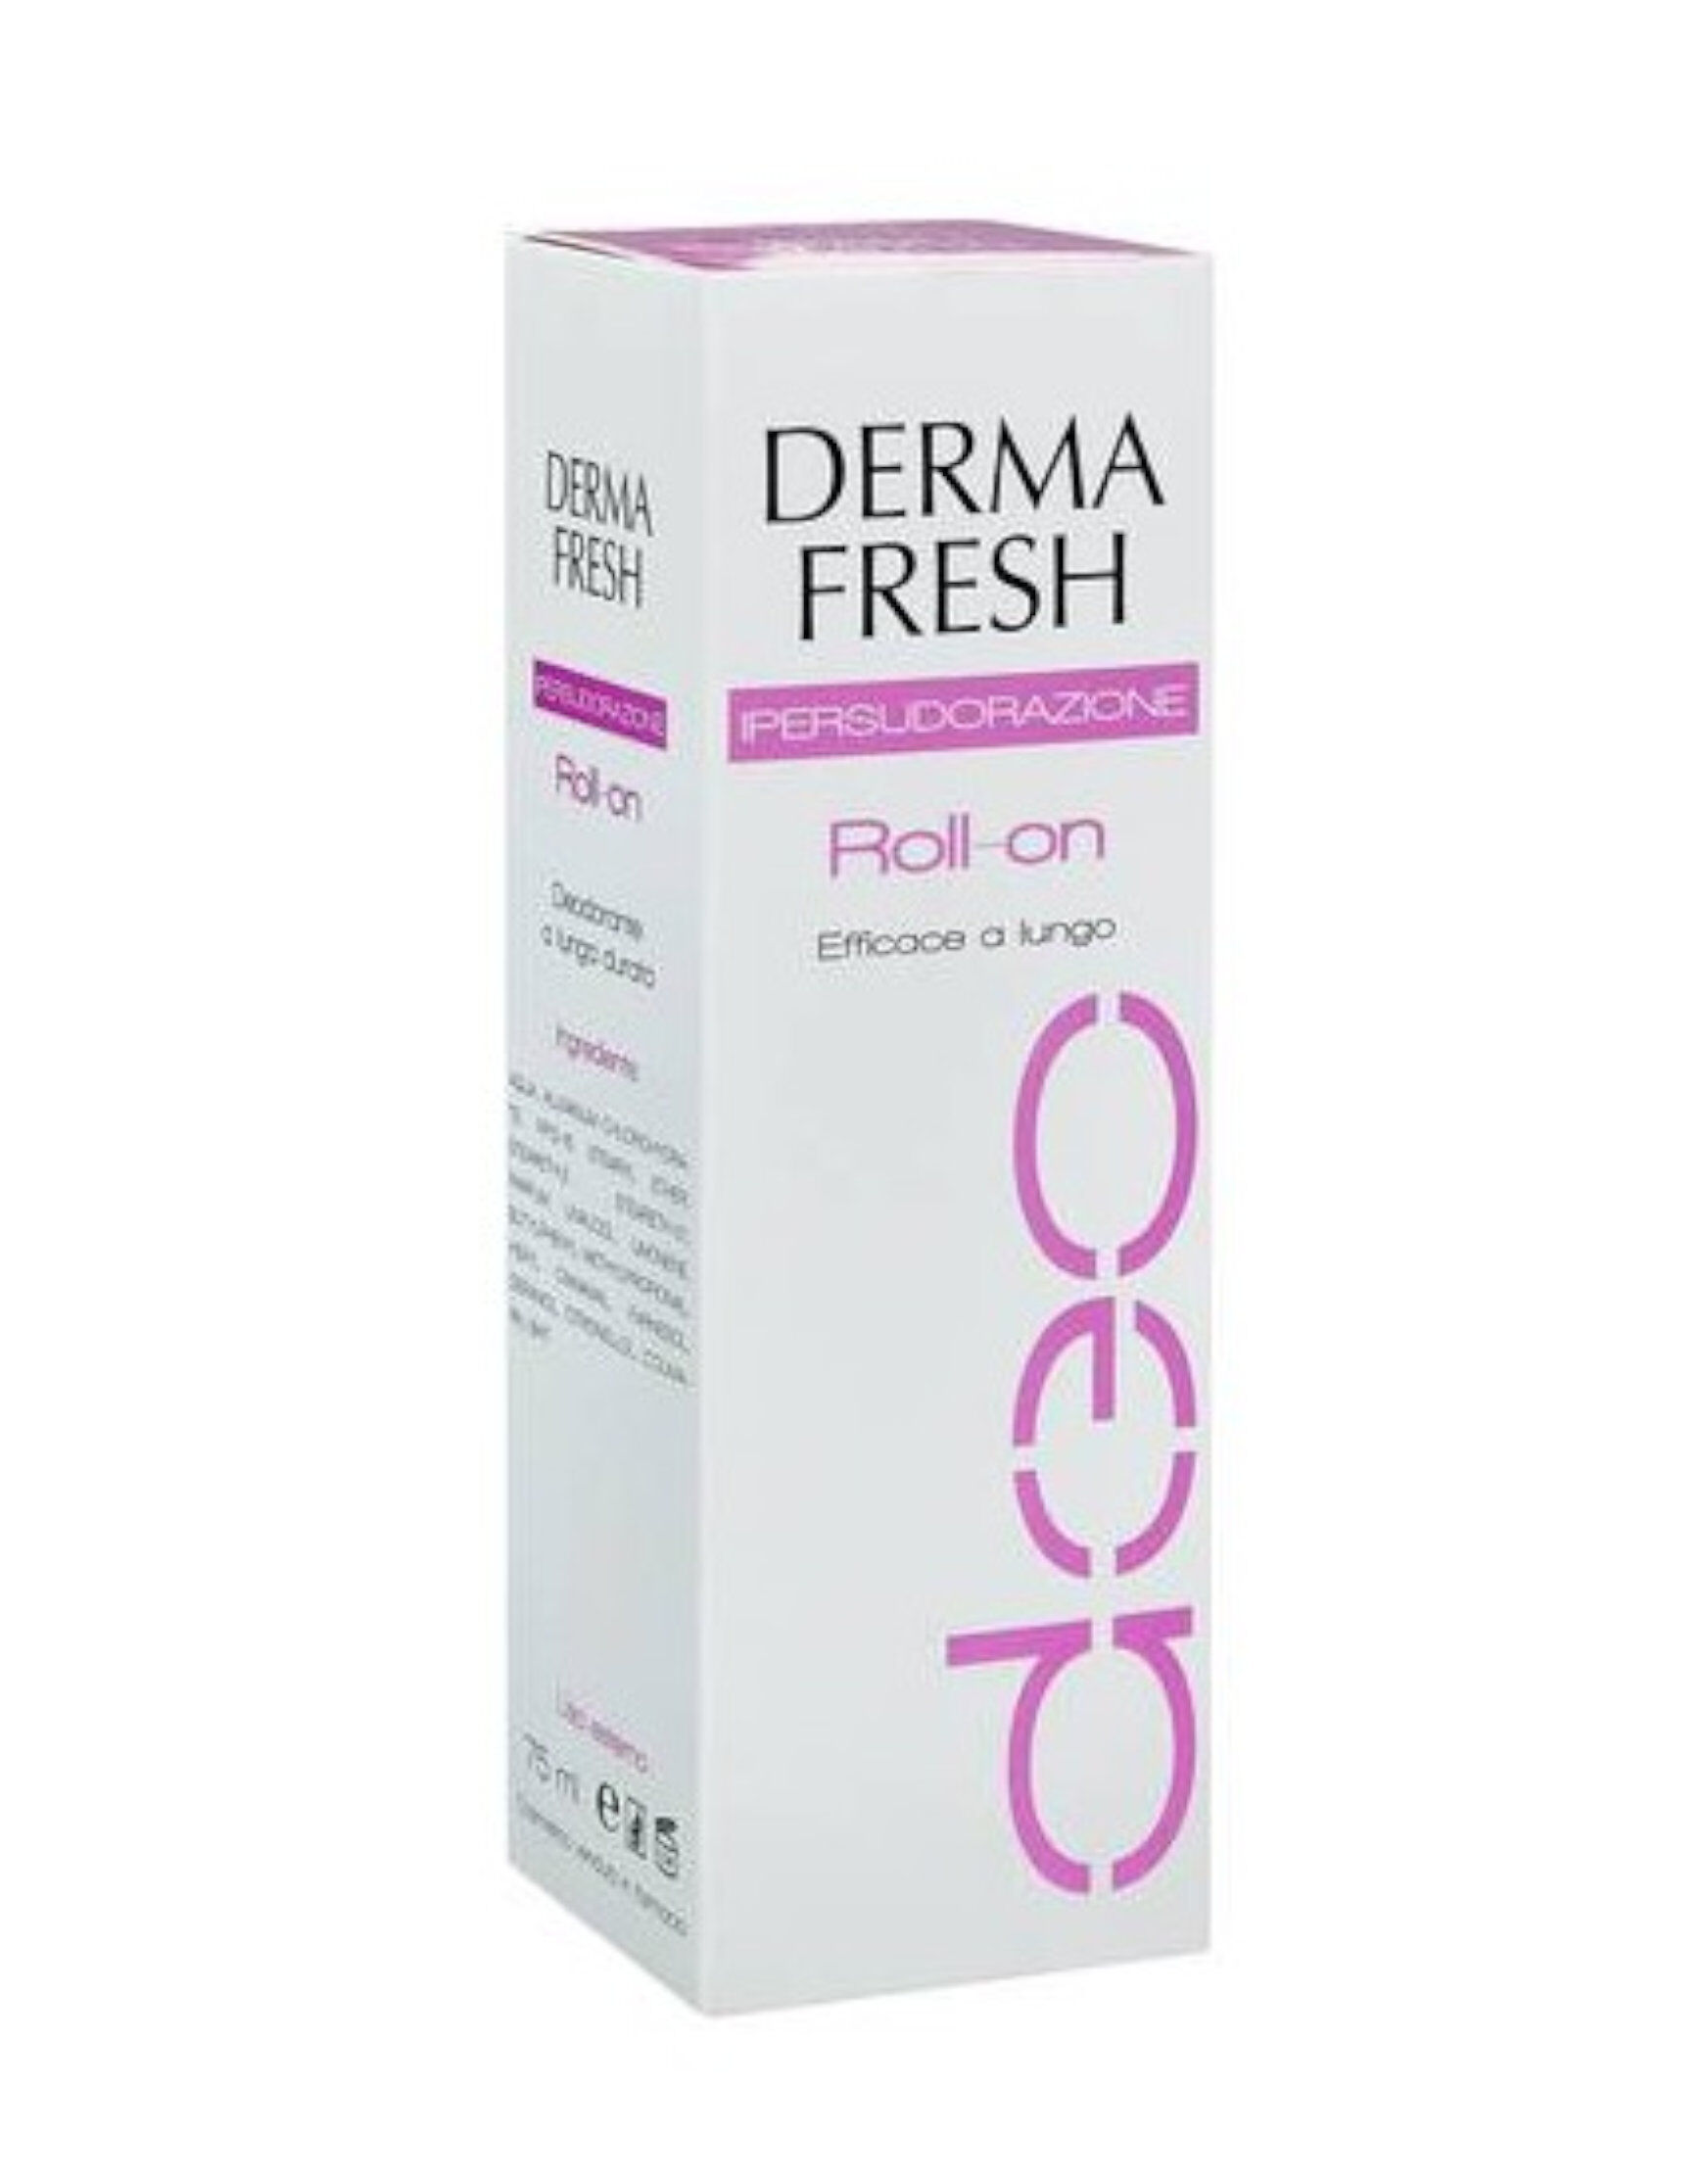 dermafresh - deodorante ipersudorazione roll-on 75 ml